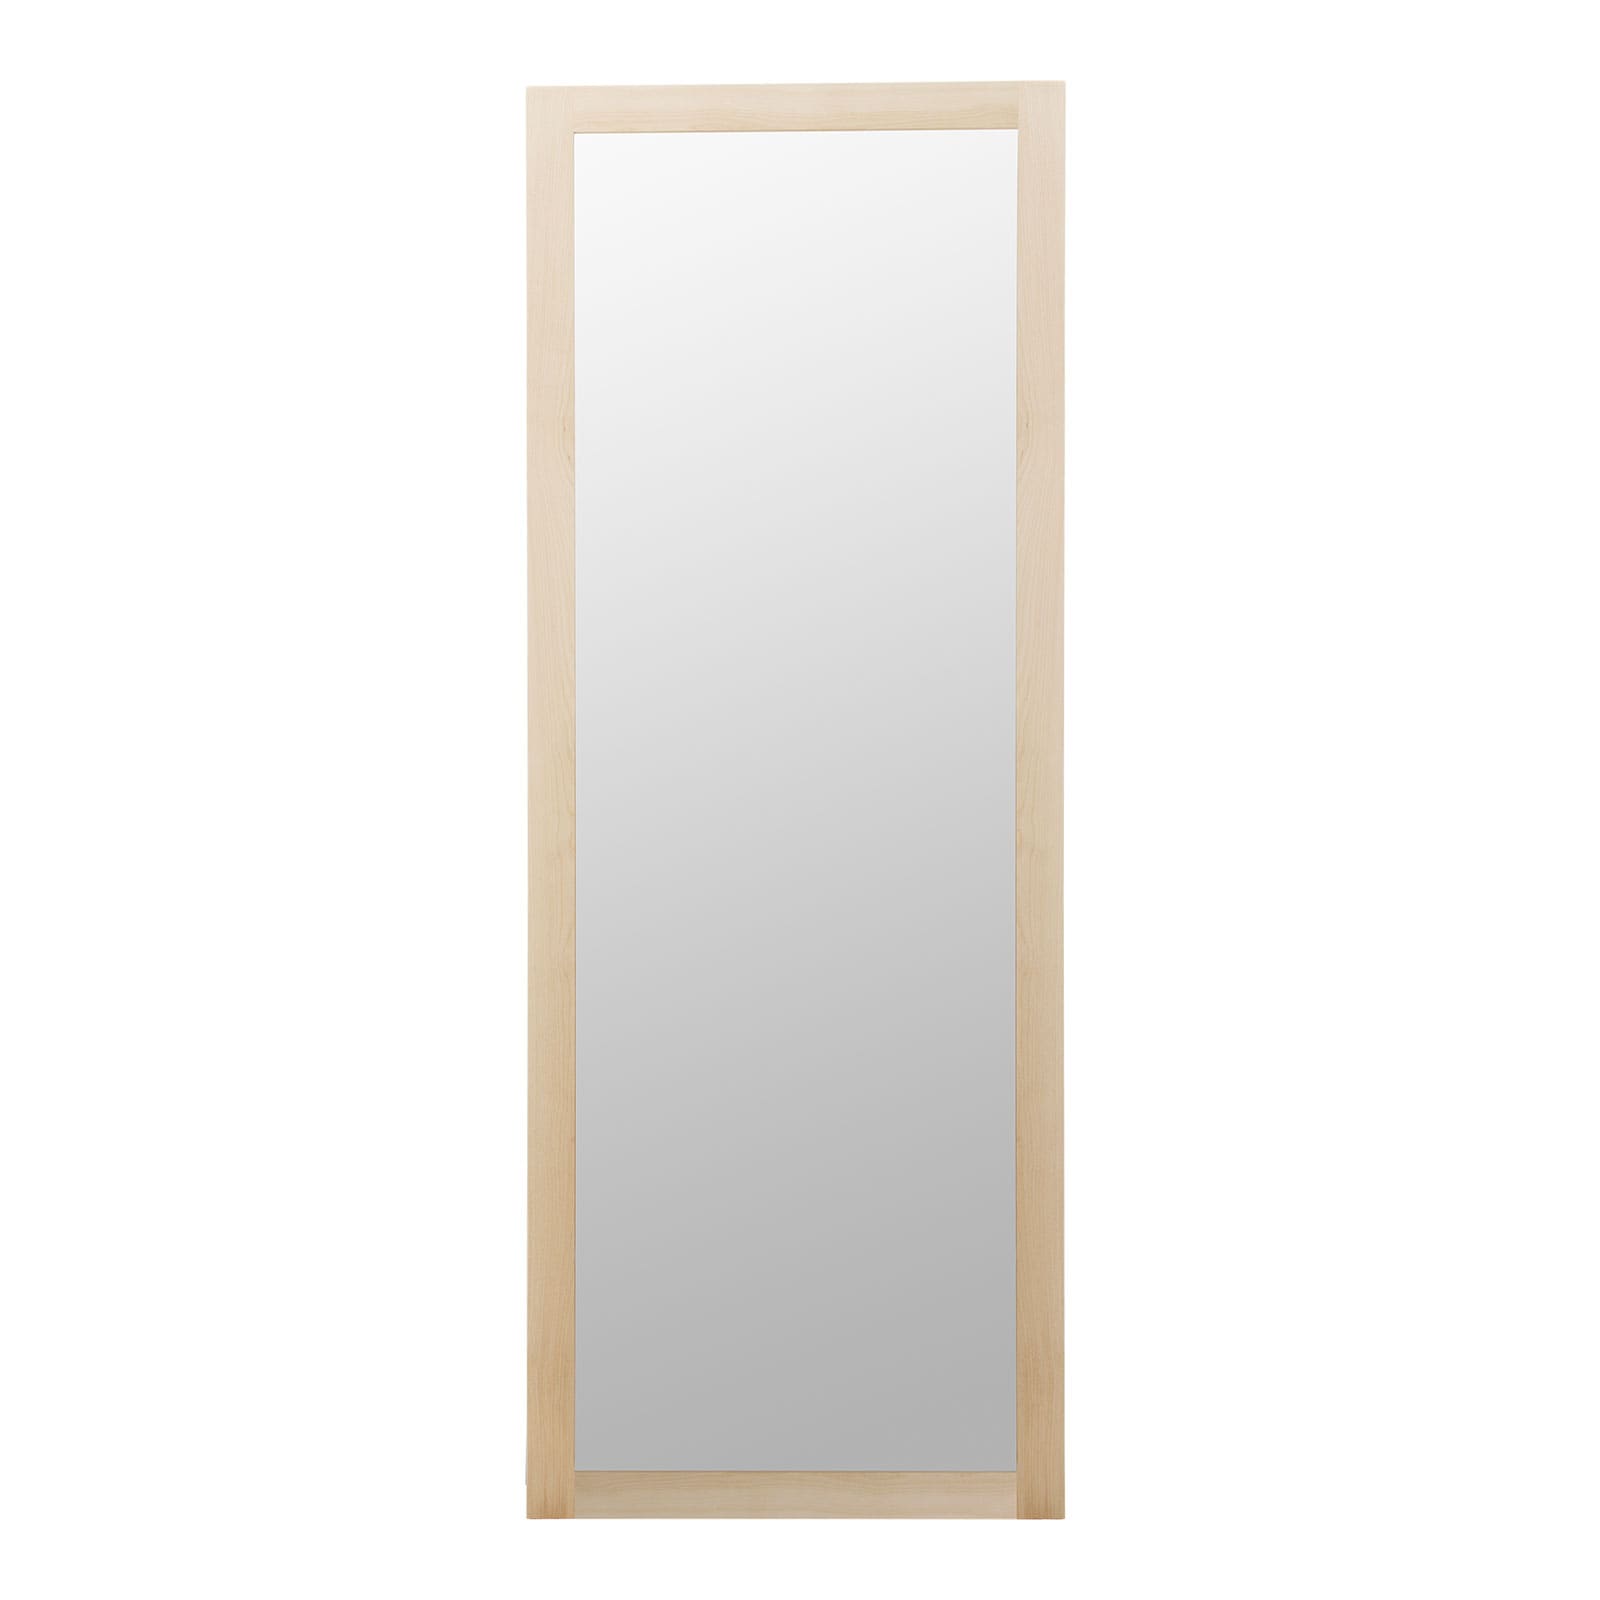 Spegel 150cm Björk obehandlad/vitolja Norrgavel